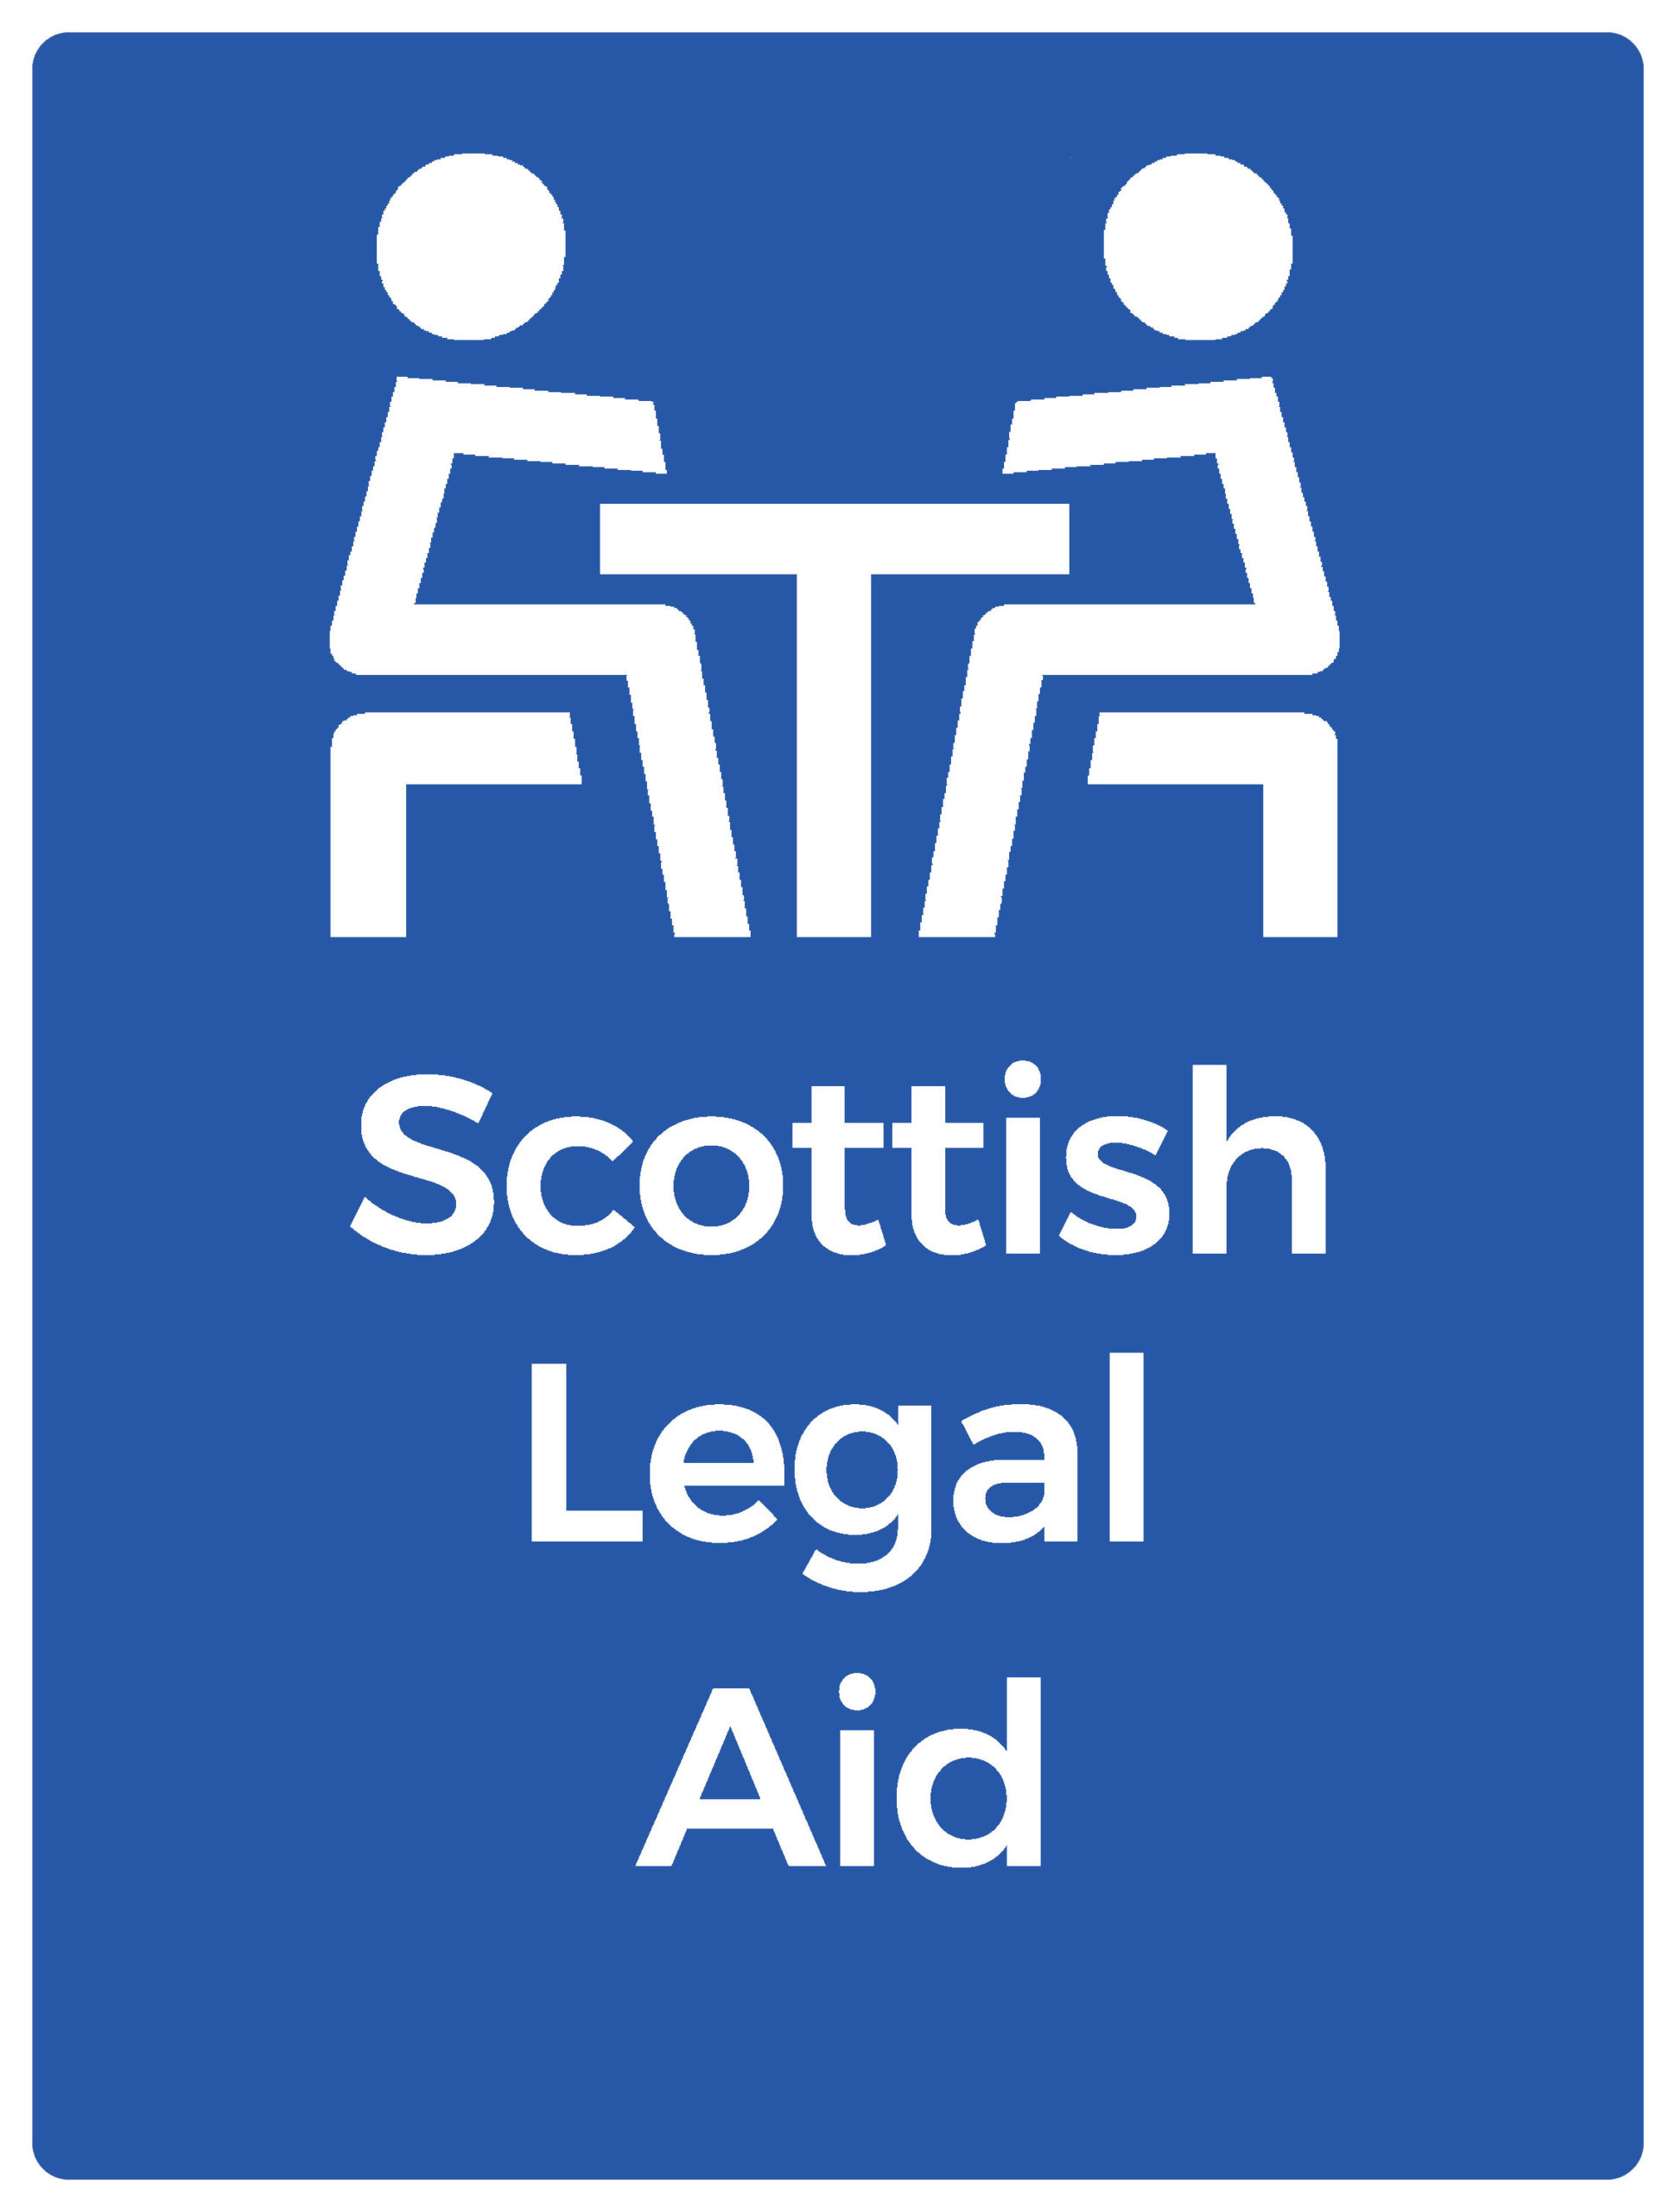 https://walegal.co.uk/wp-content/uploads/2020/07/Legal-aid-logo-web-scaled.jpg